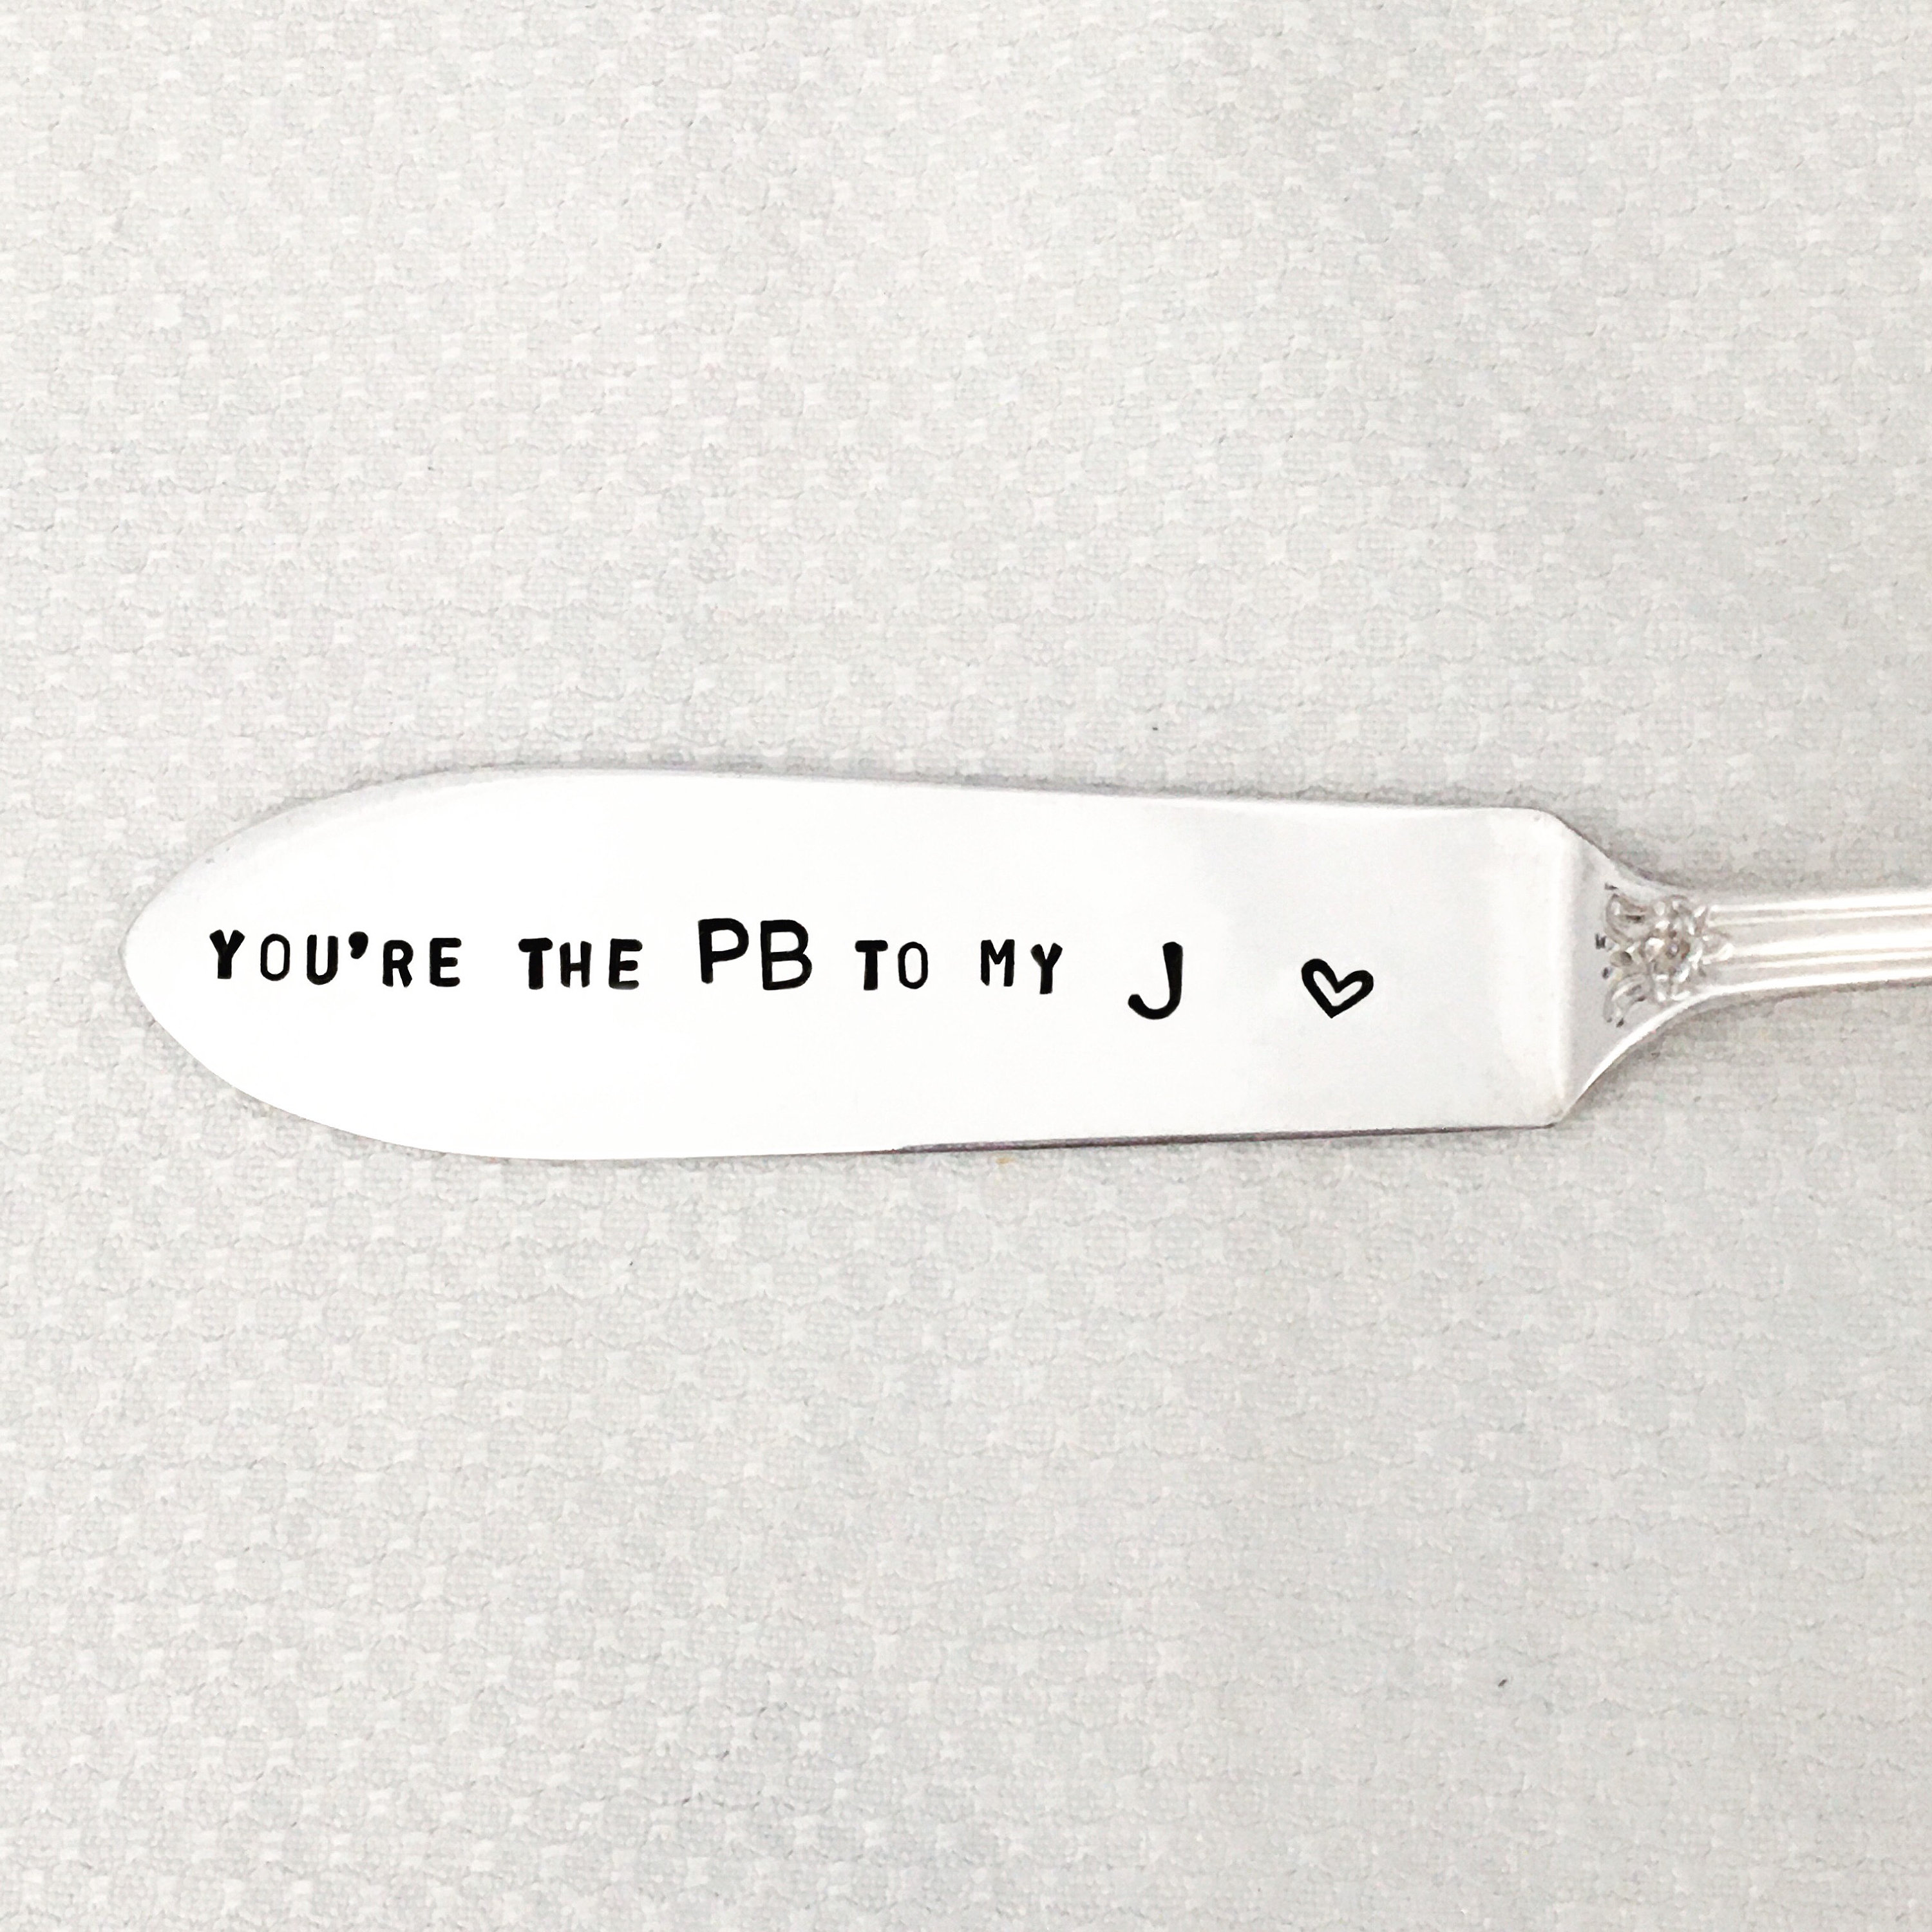 P. b. and j. spreader spatula